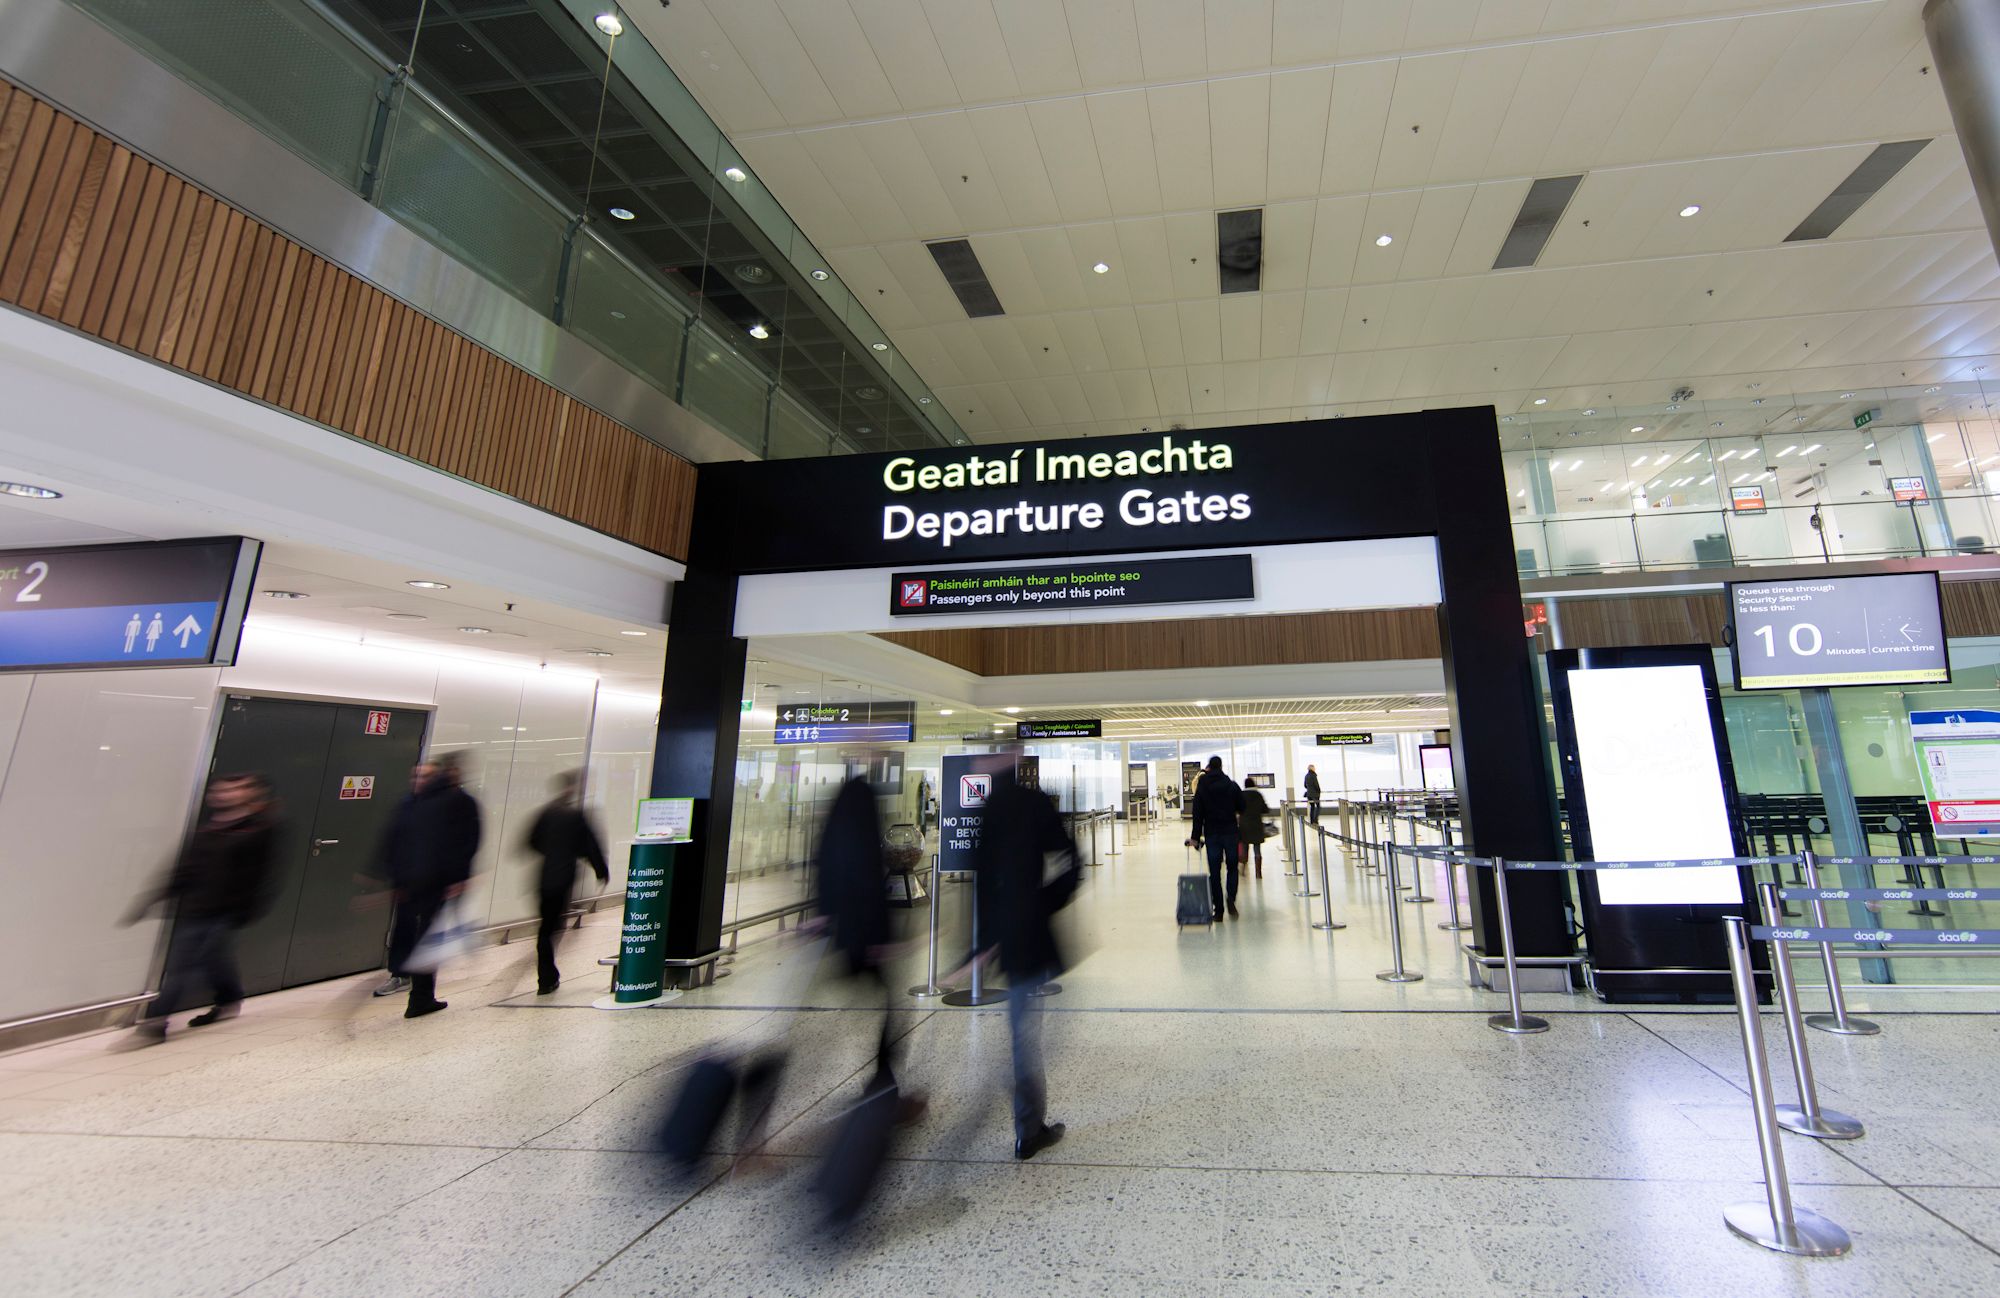 Departure gates in Dublin Airport